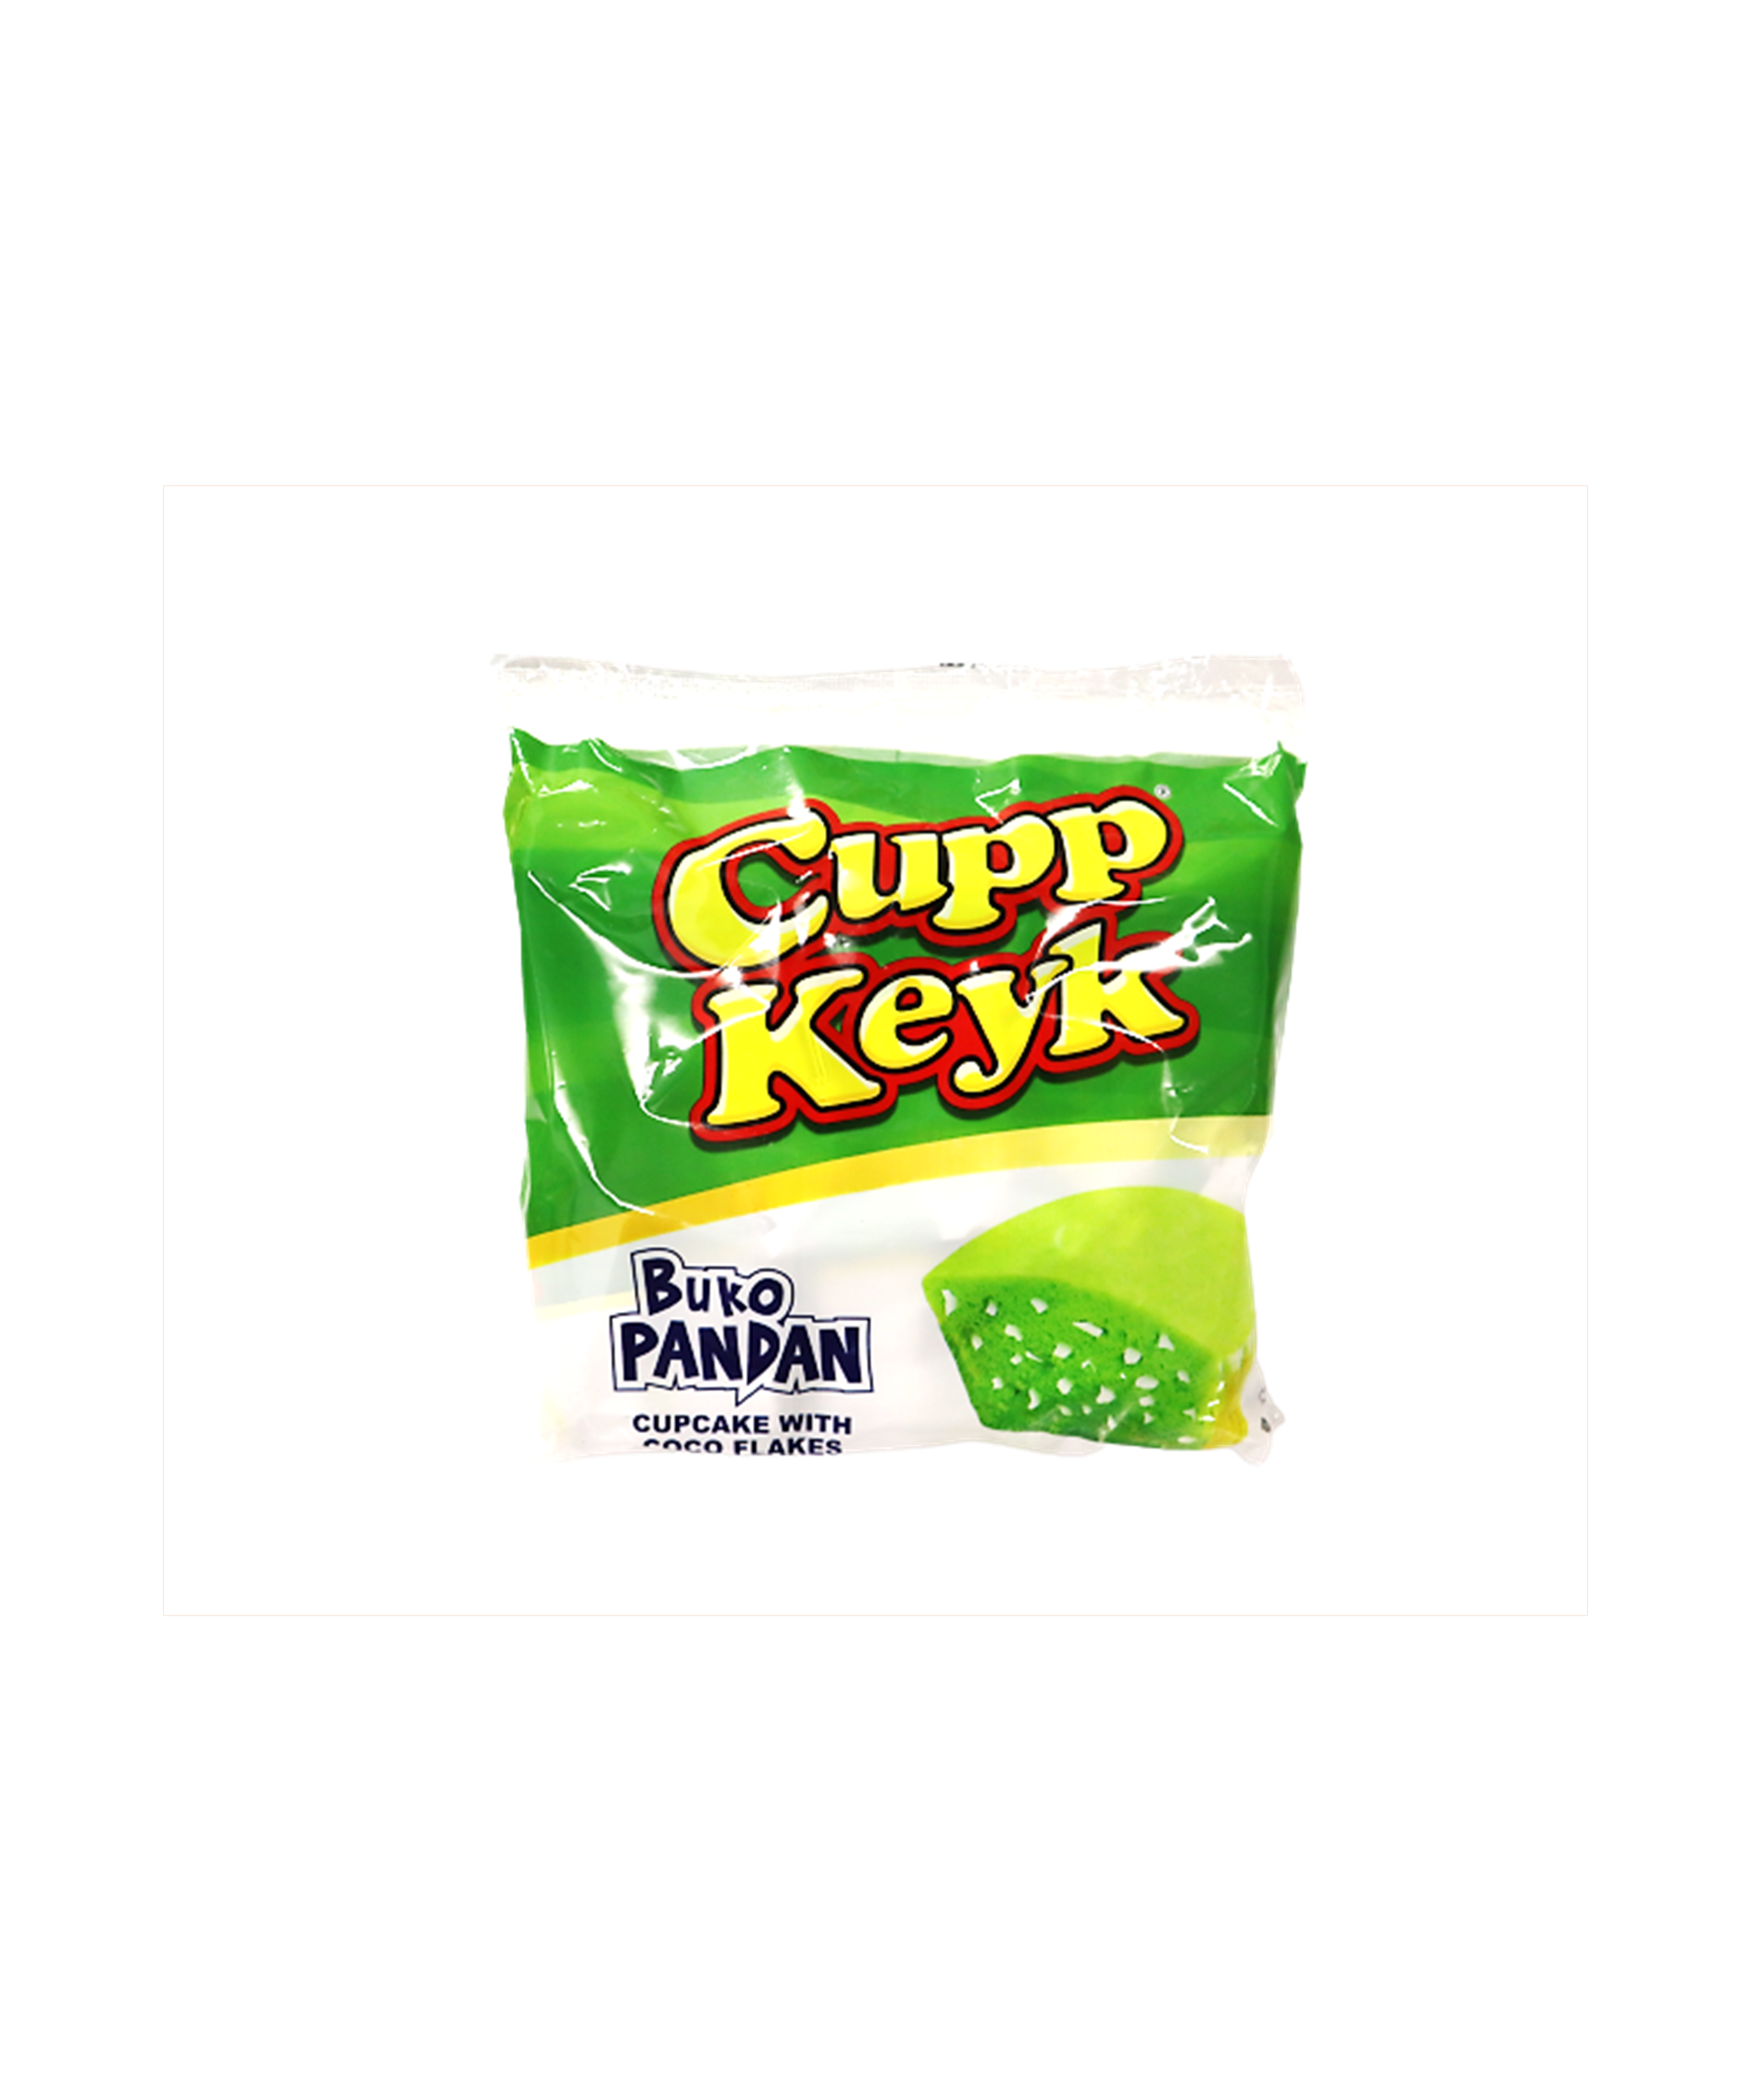 Cupp Keyk combo 340g